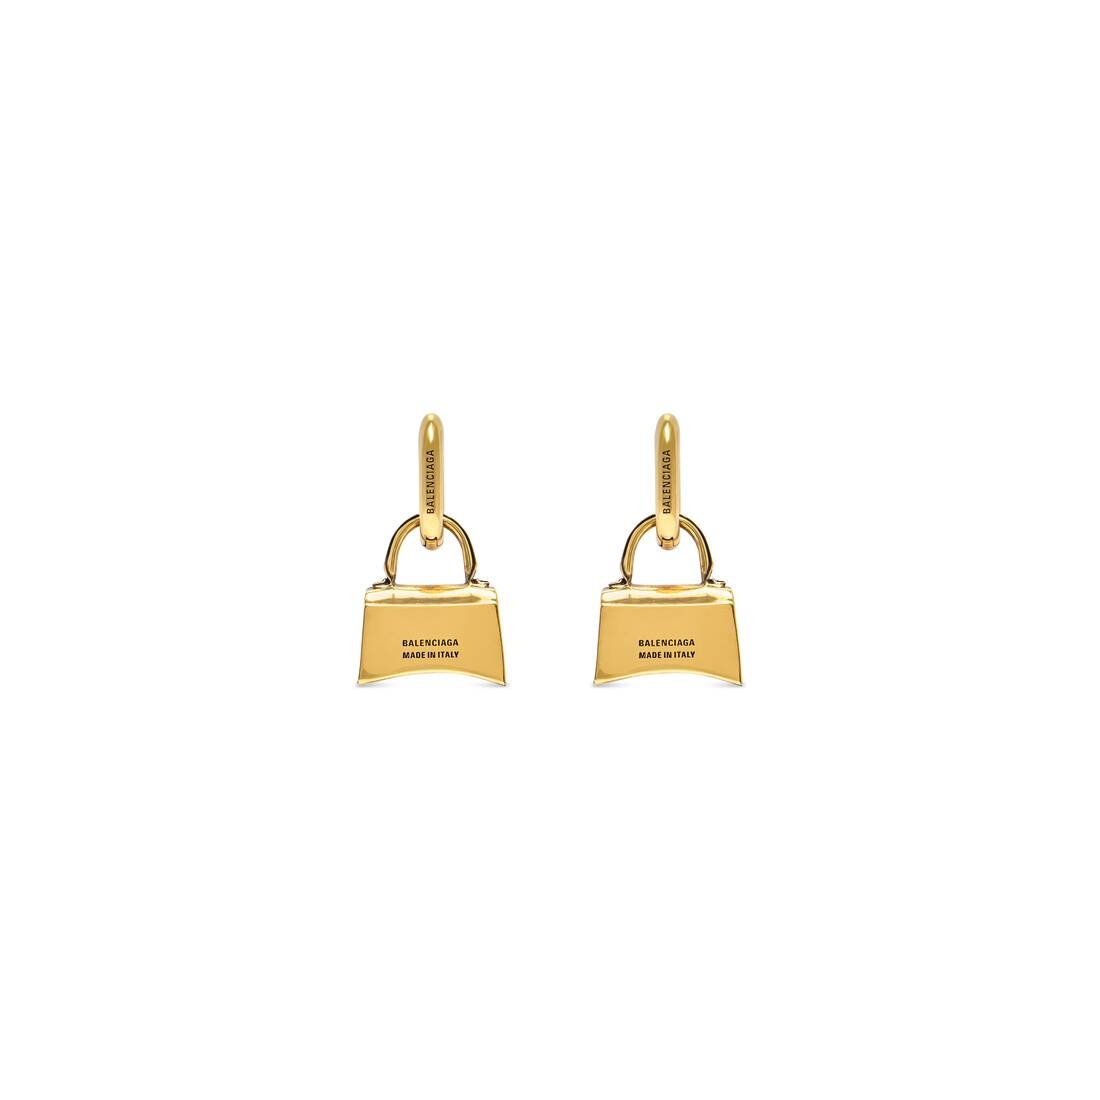 Bag Earrings in Gold - Balenciaga